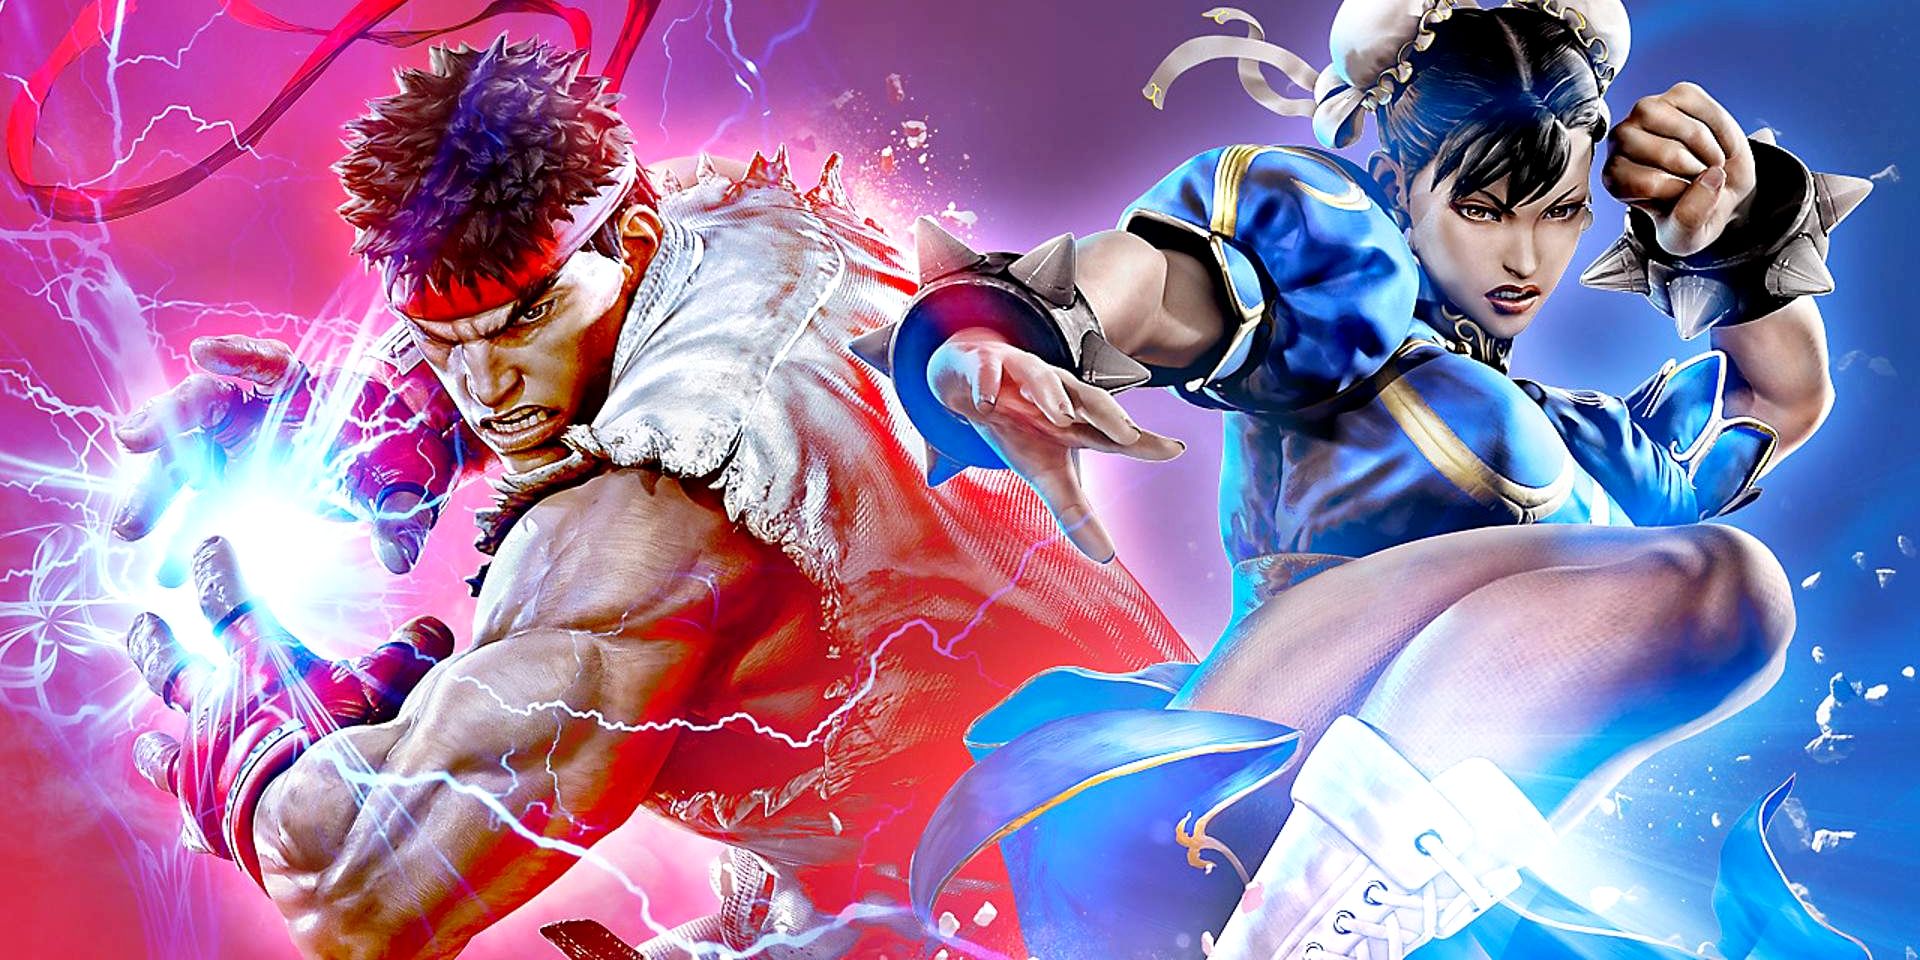 Chun-Li and Ryu posing in Street Fighter 5 Champion Edition keyart